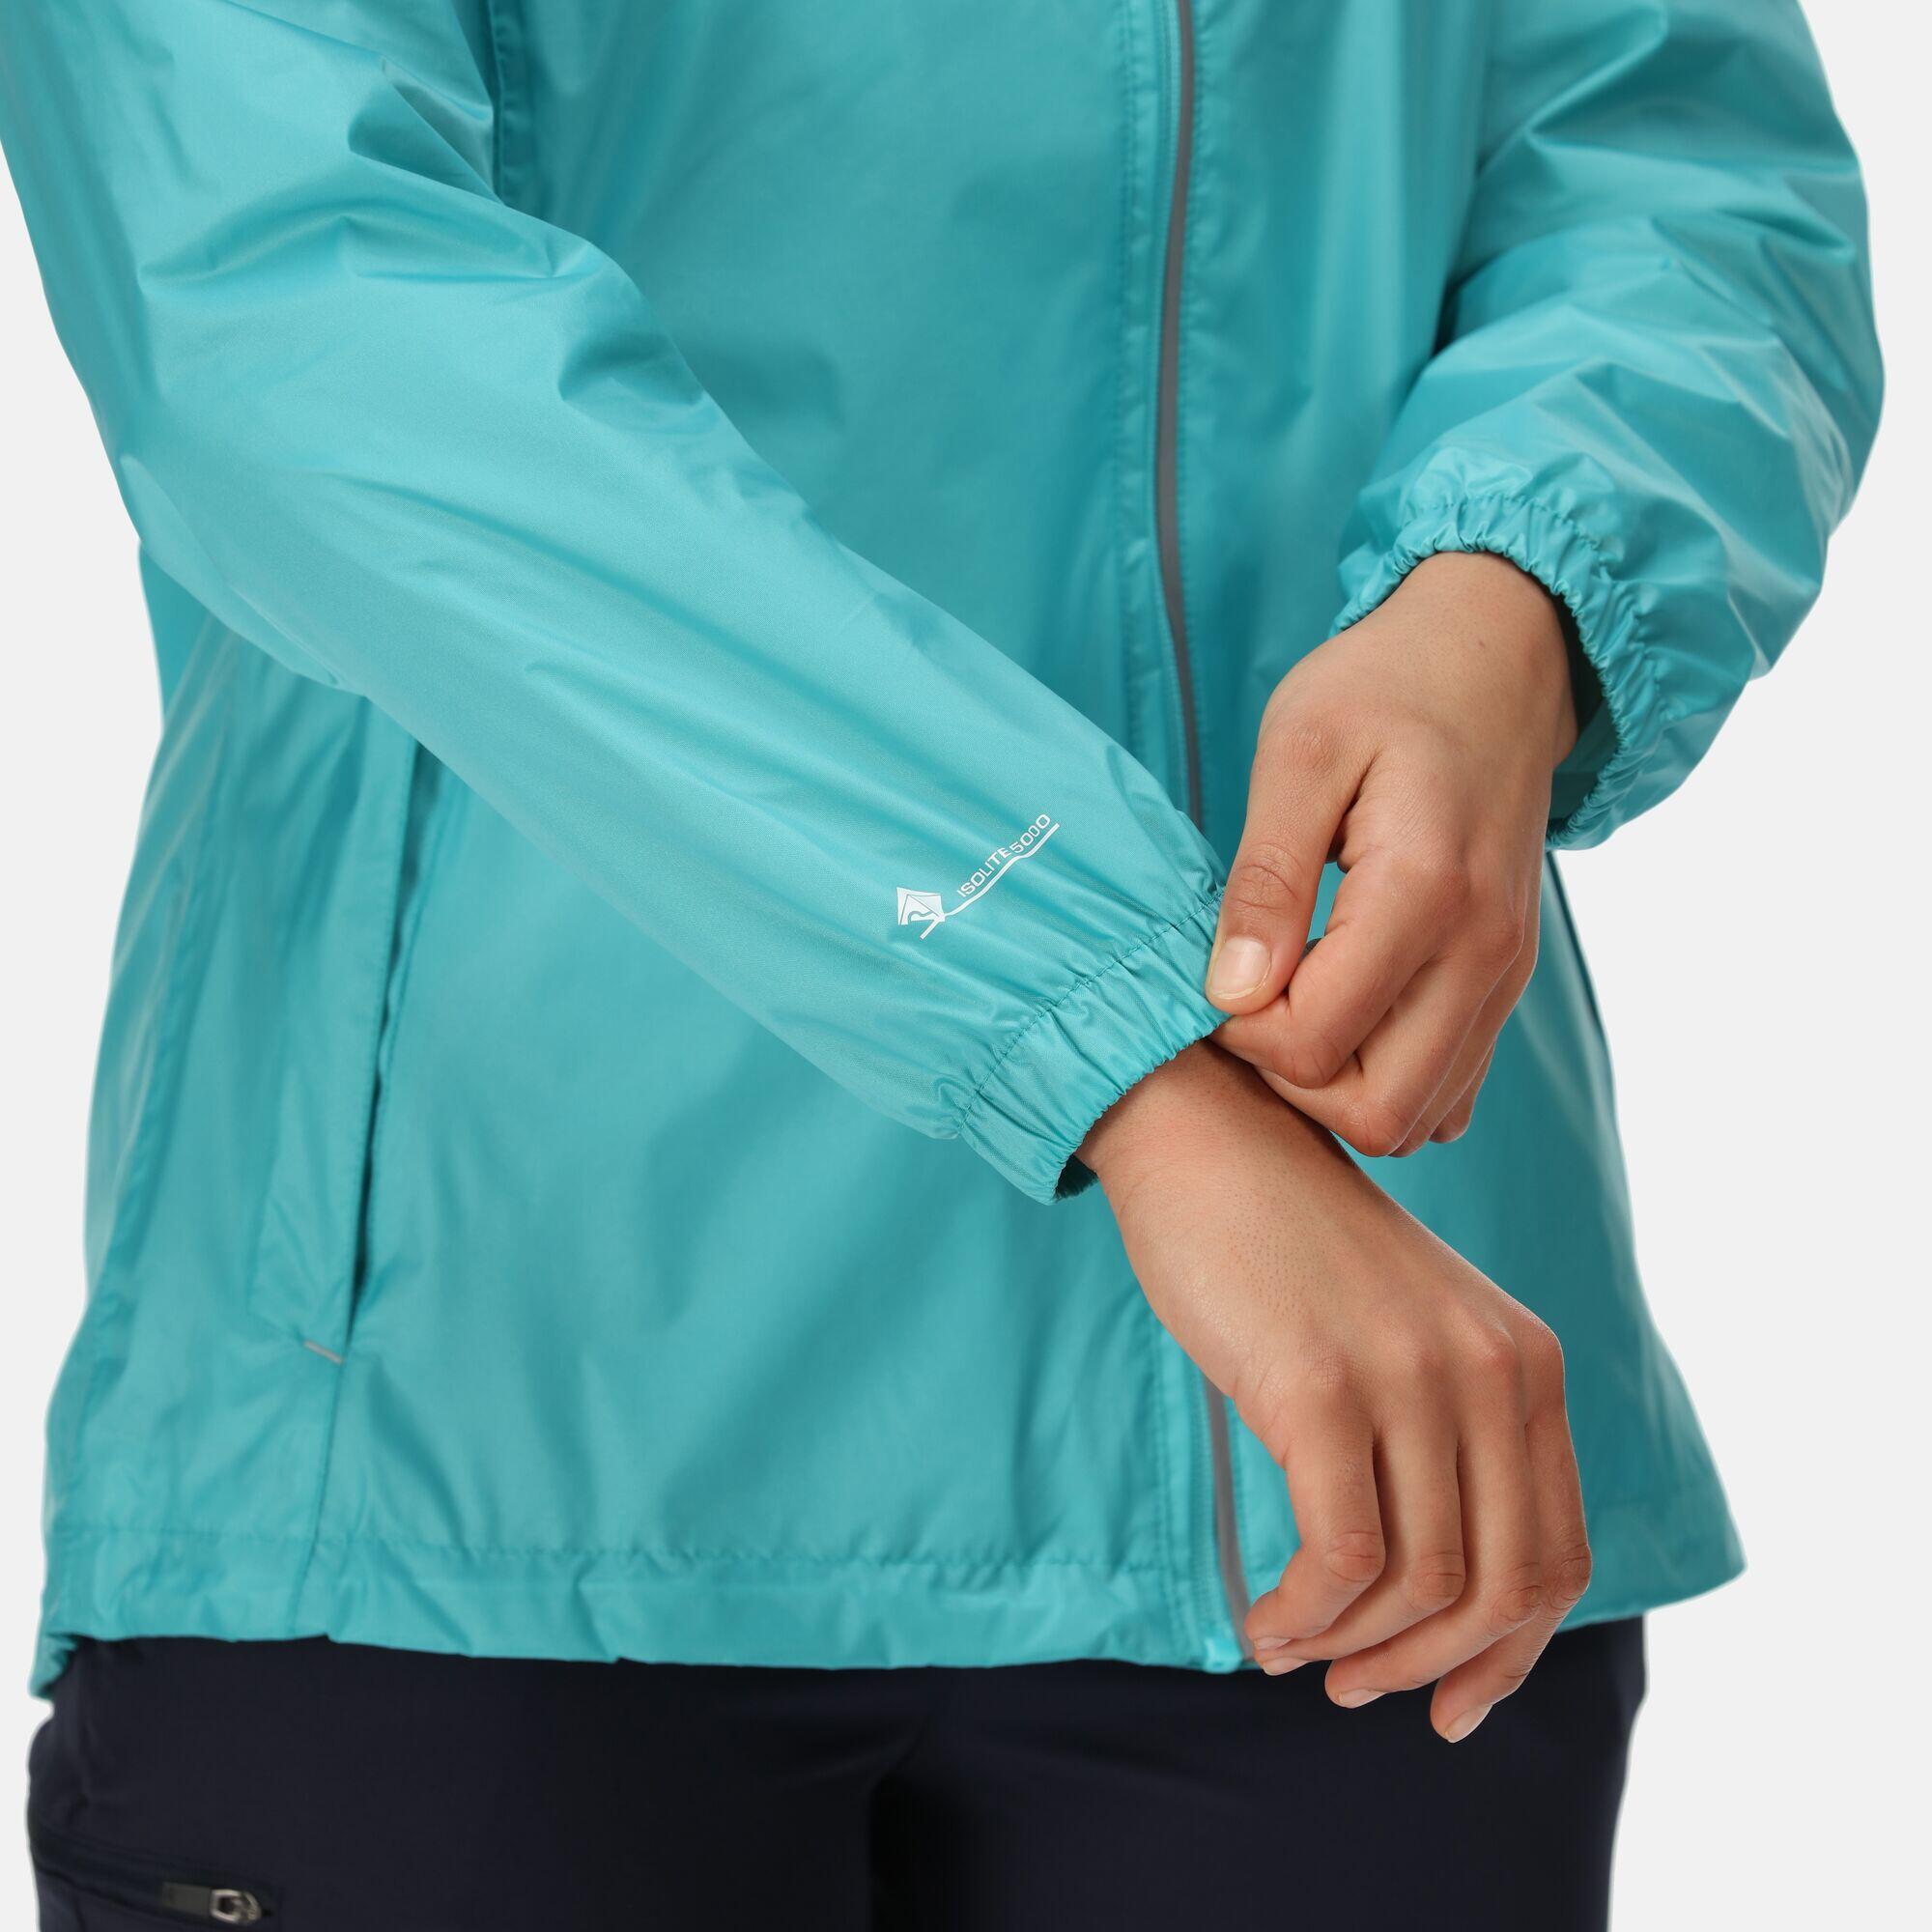 Corinne IV Women's Fitness Waterproof Rain Jacket - Turquoise 5/6